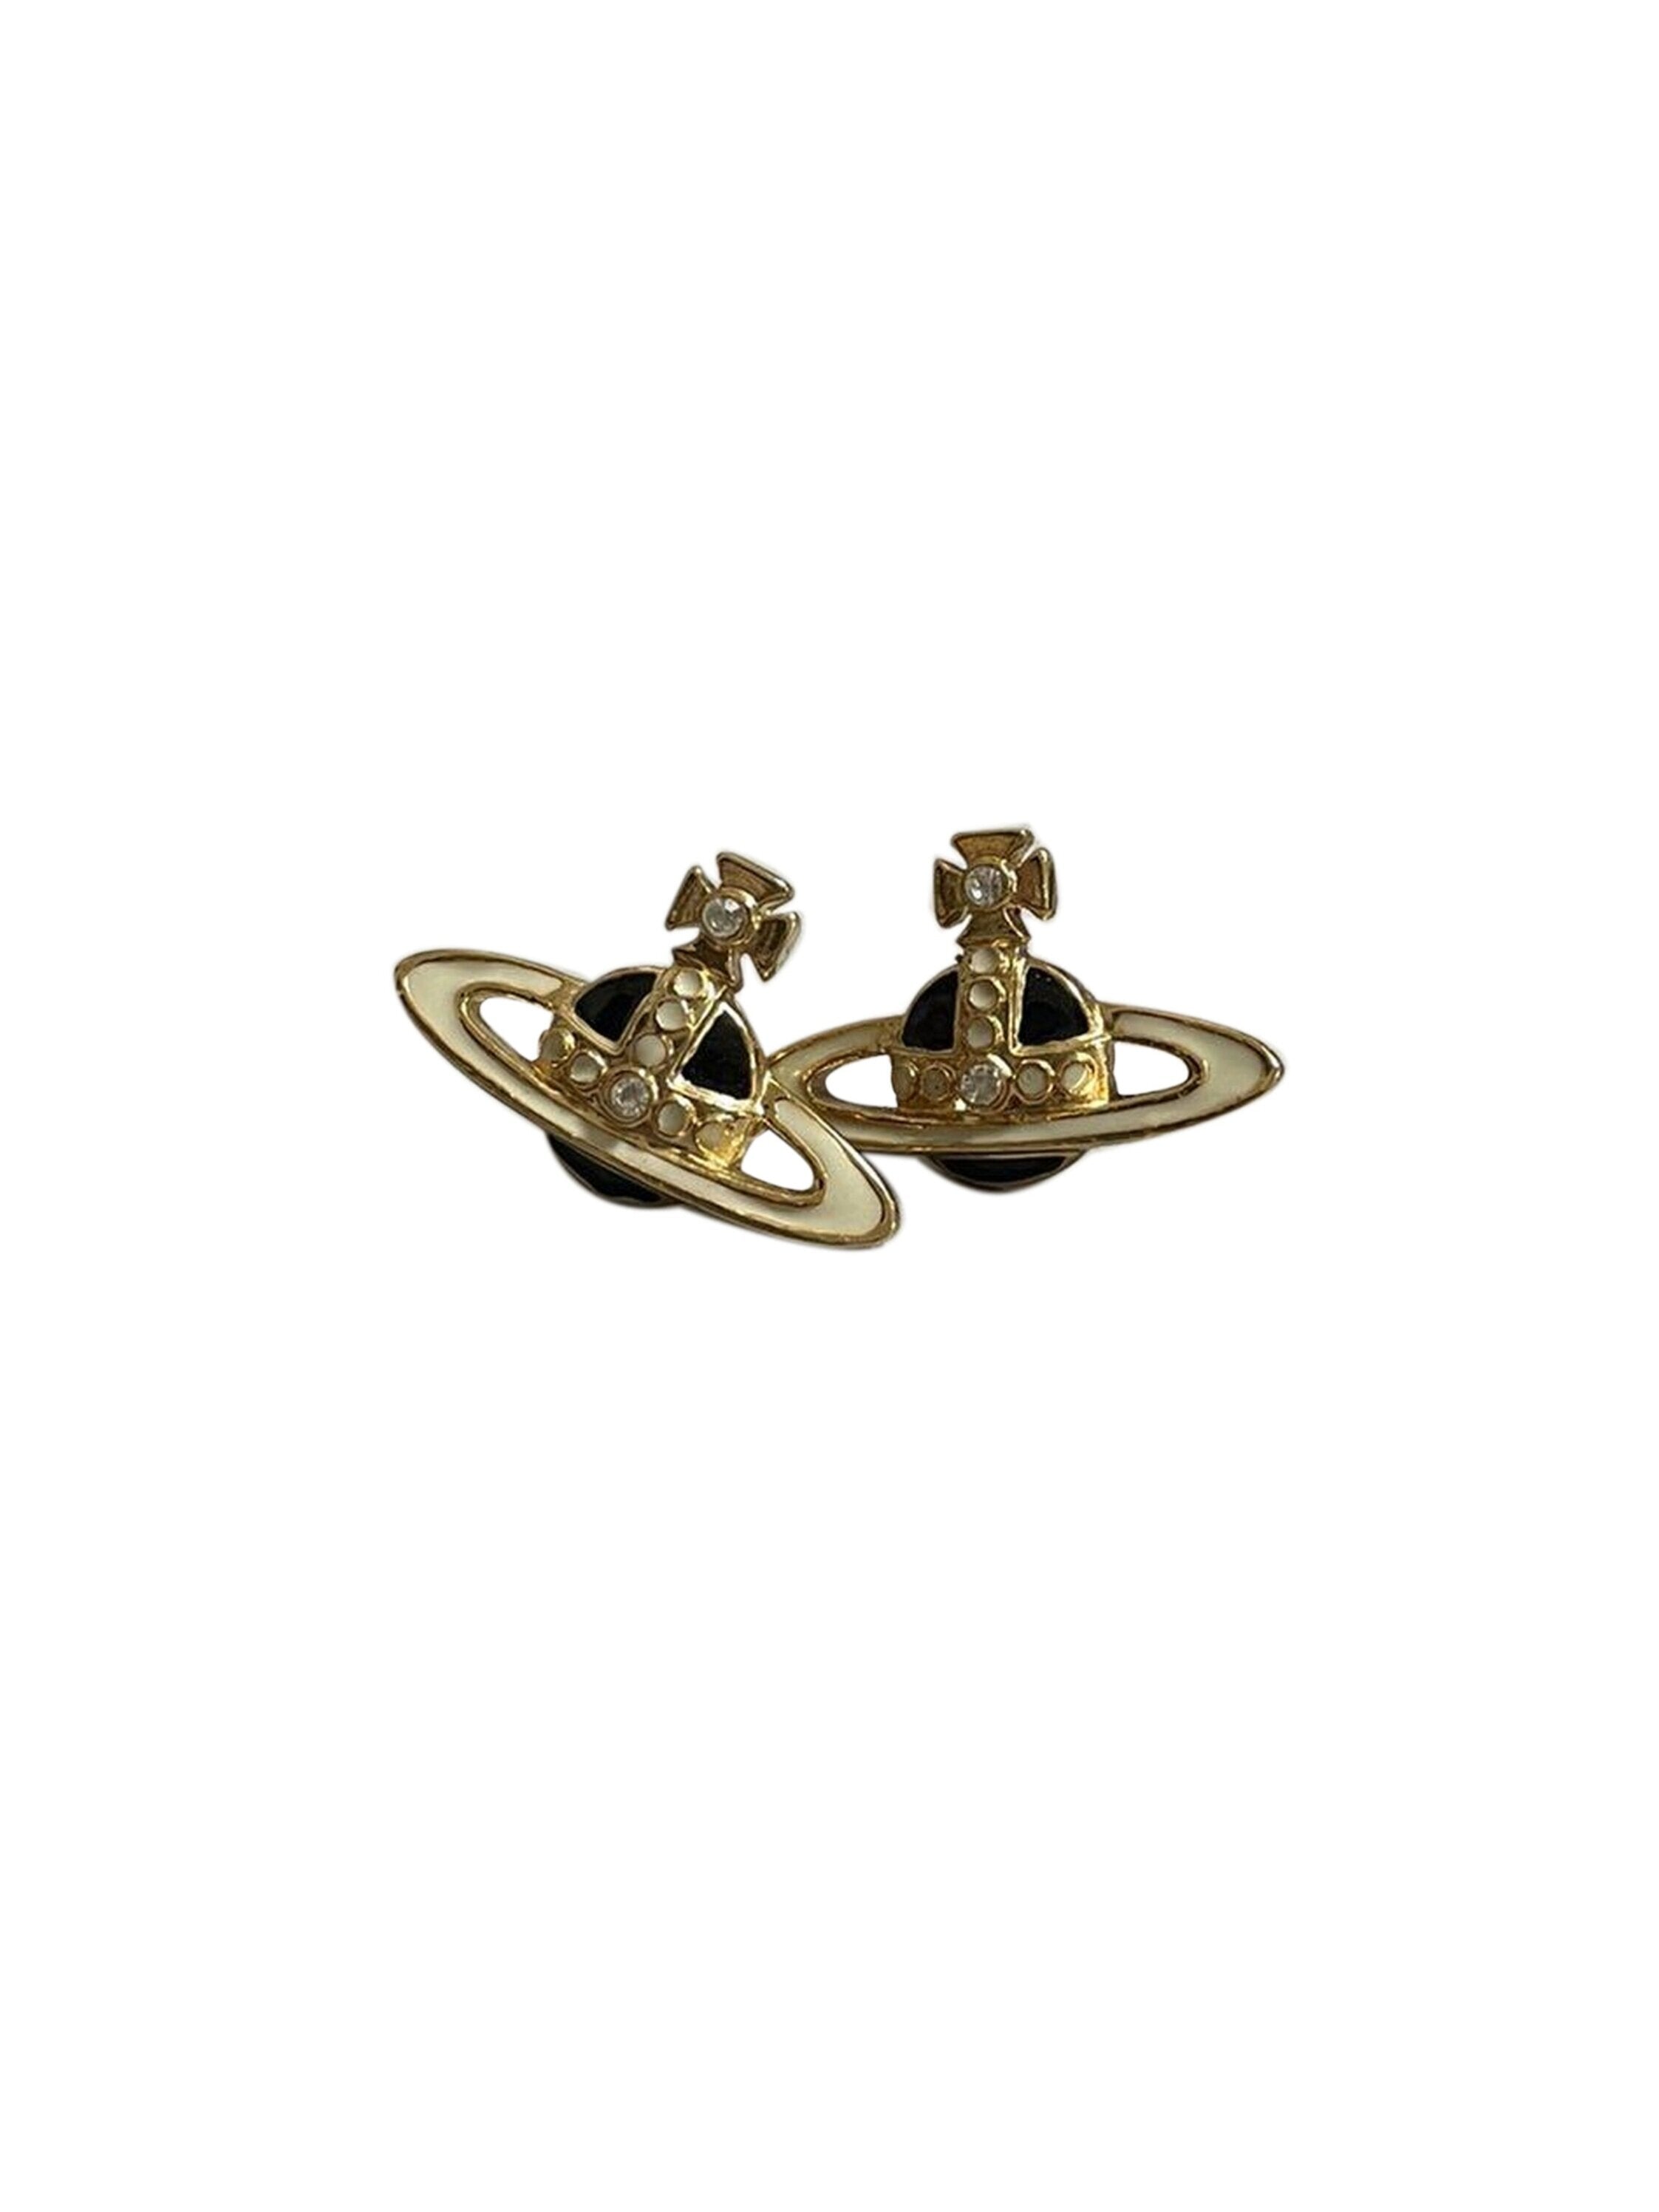 Vivienne Westwood 2000s Black and Gold Orb Earrings